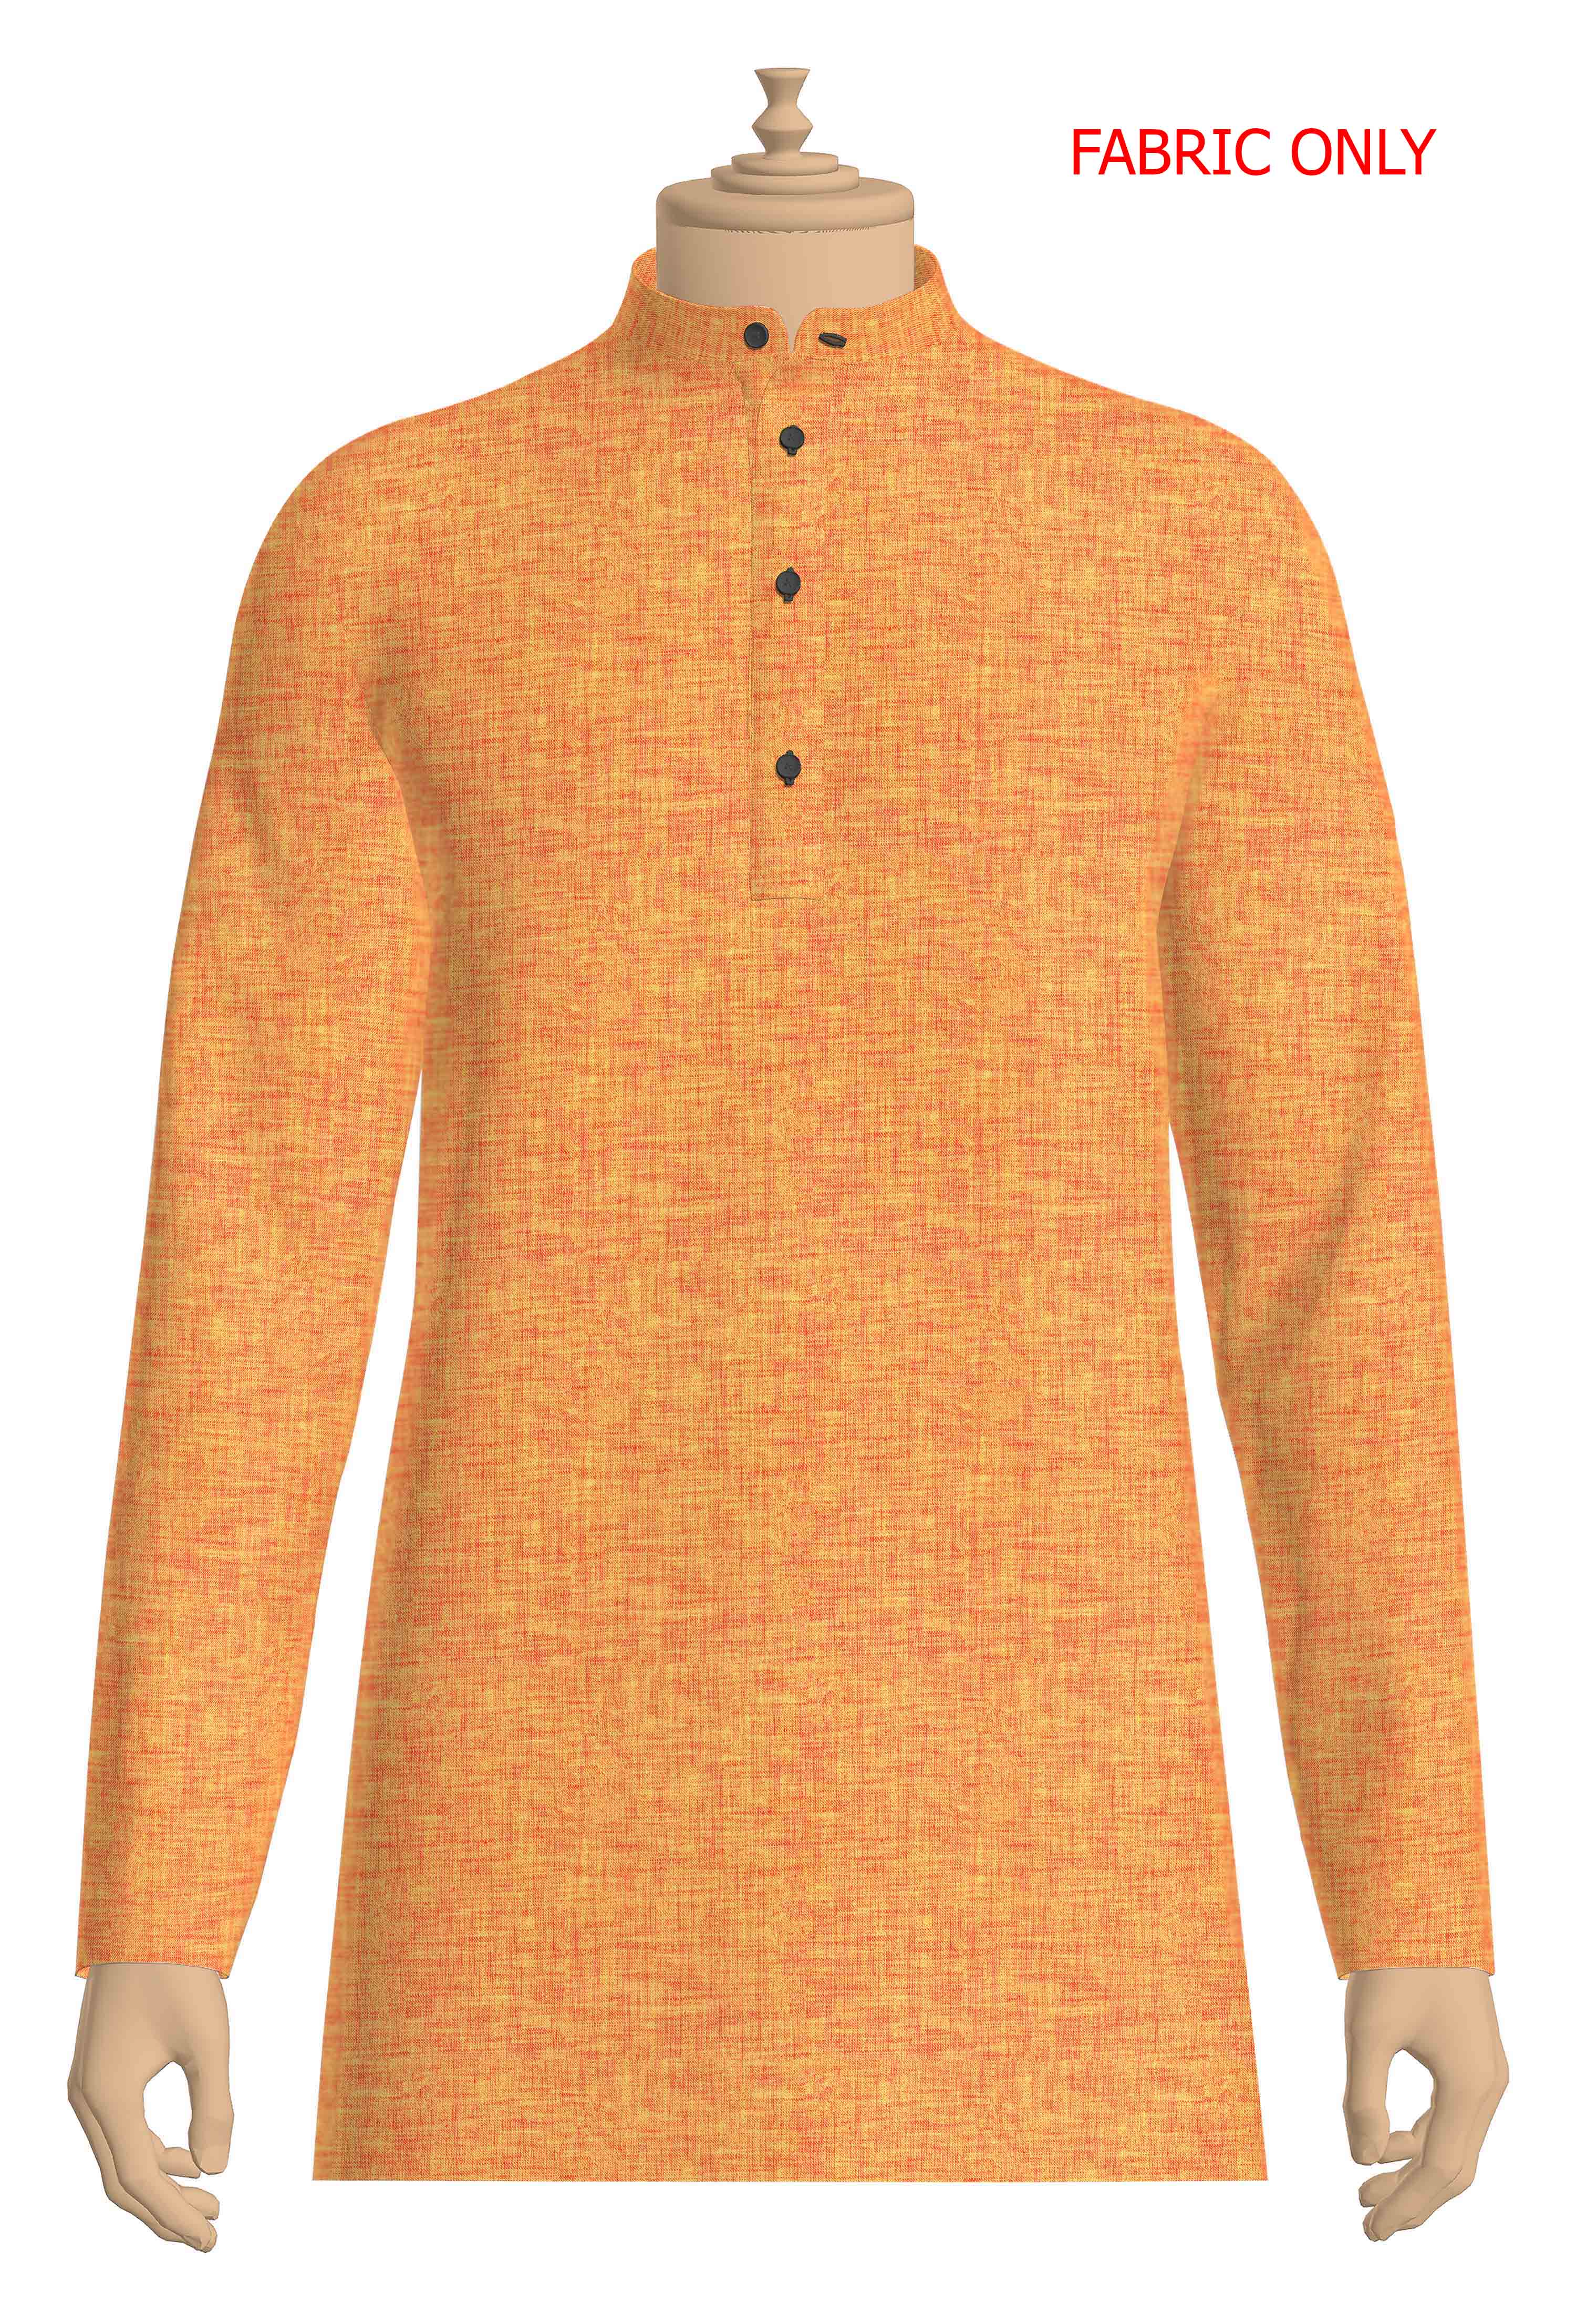 Cotton Blend Orange Colour Kurtha Fabric Lampus - CAPC1160-63